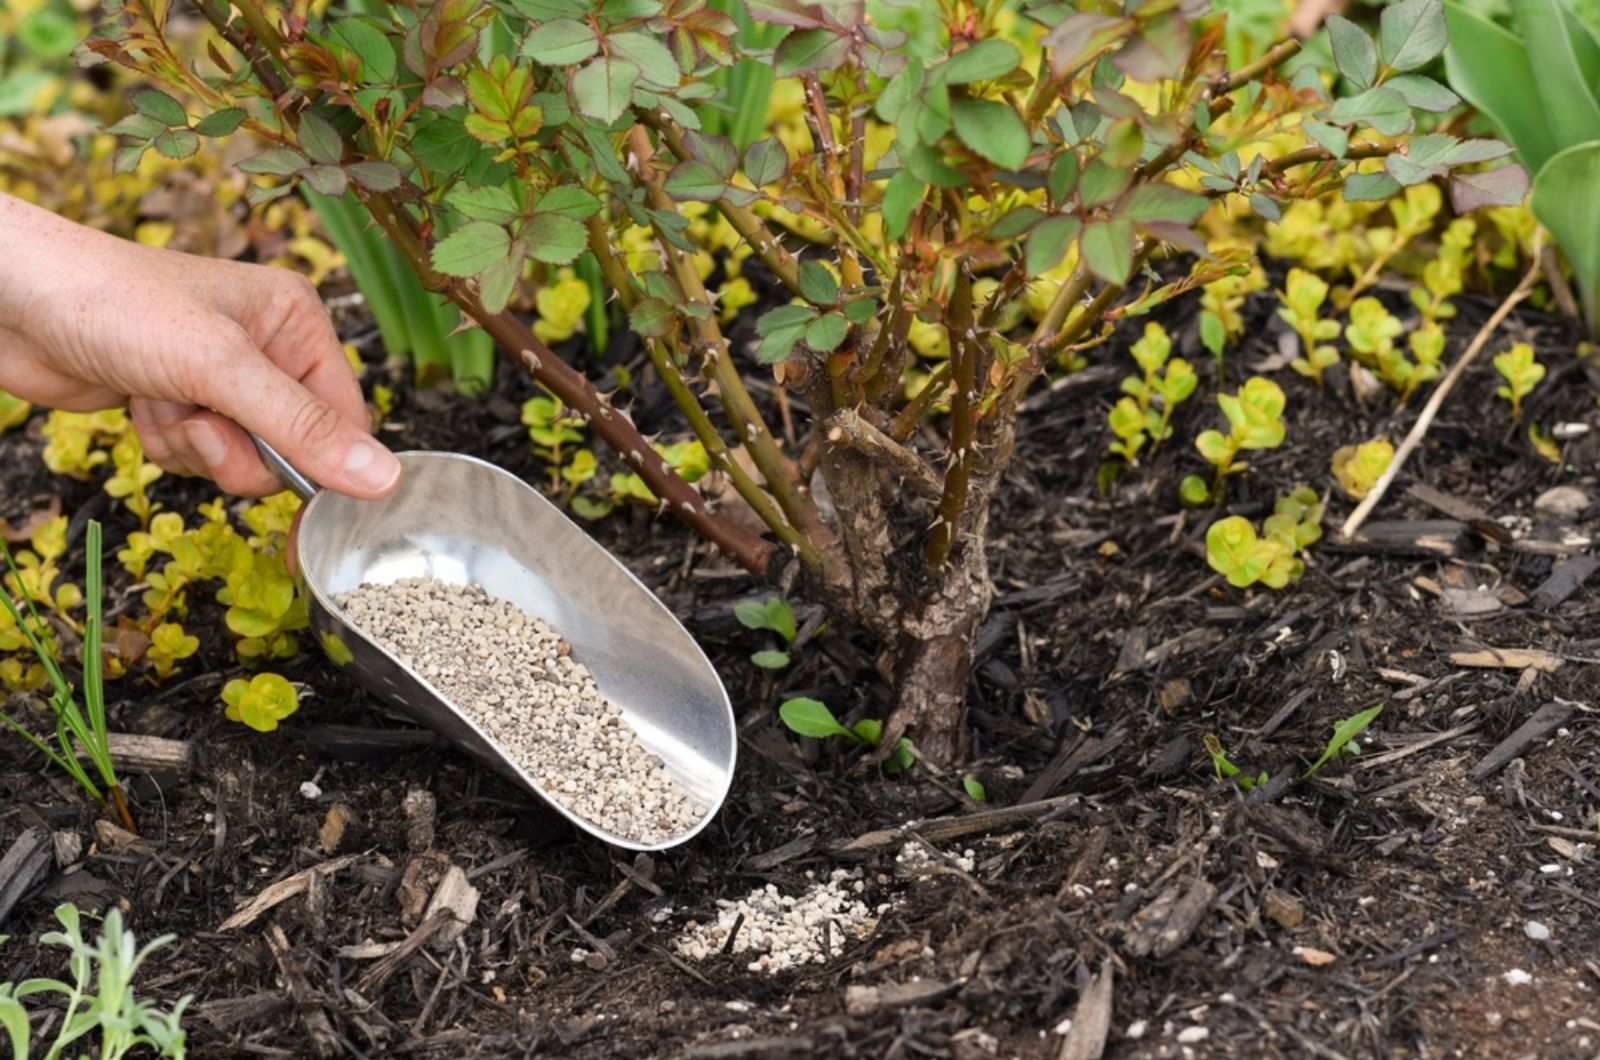 Person's hand spreading plant fertilizer under a rose bush